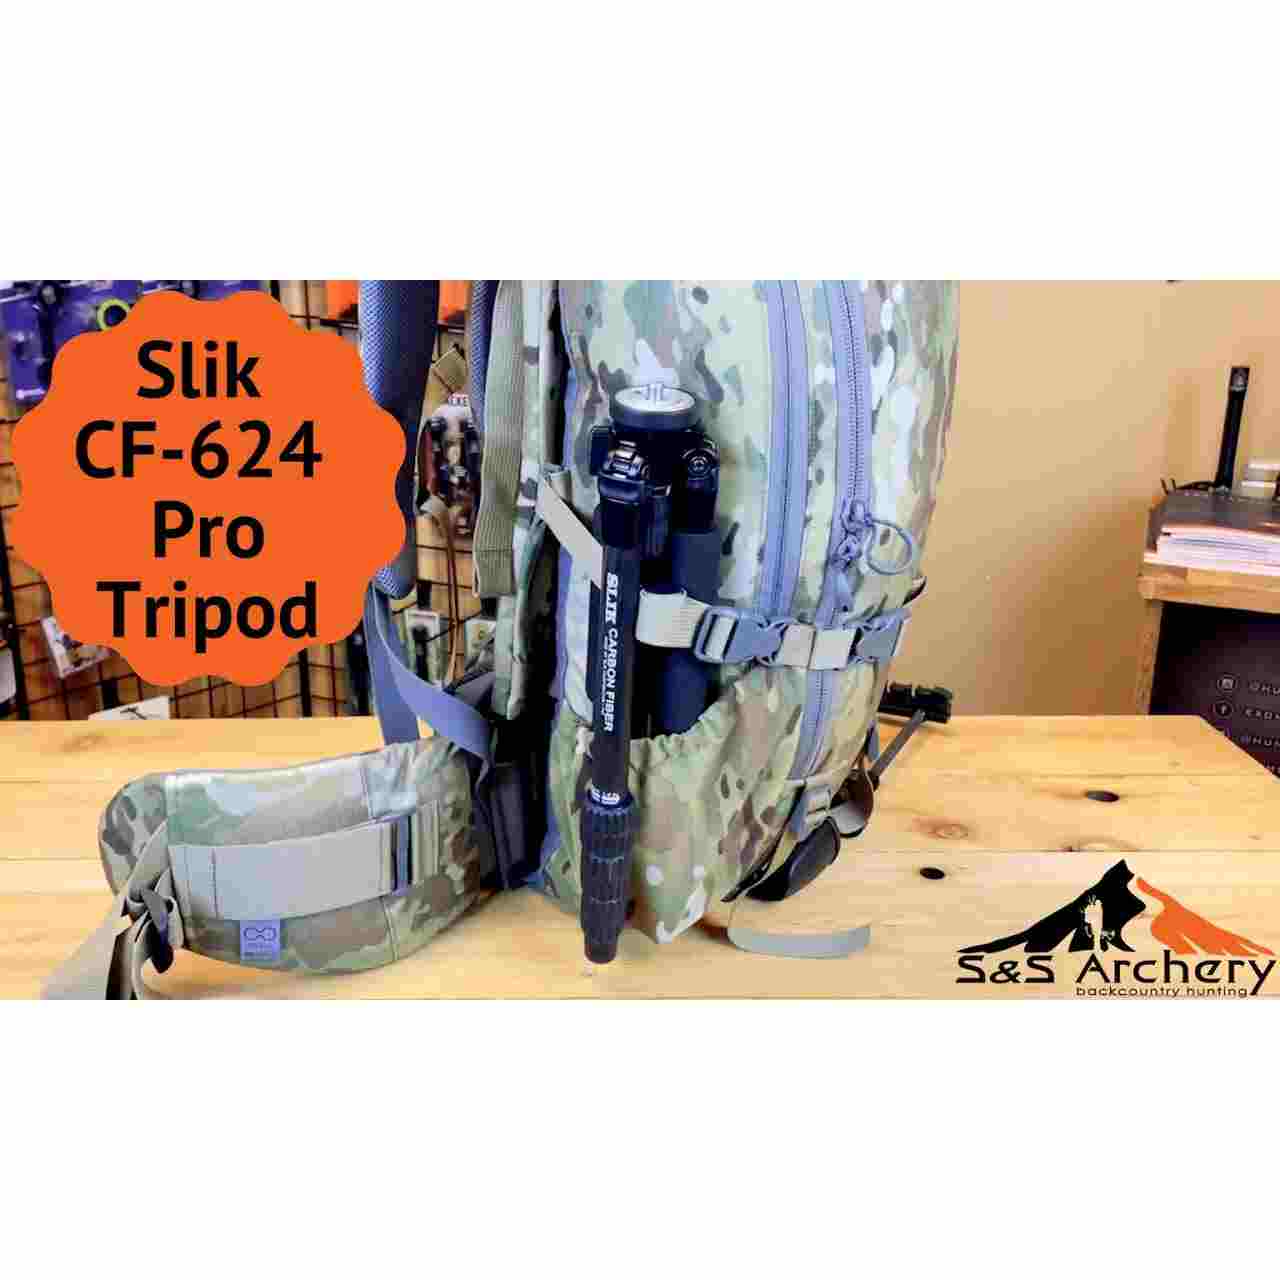 Slik 624 Pro CF Professional Carbon Fiber Tripod